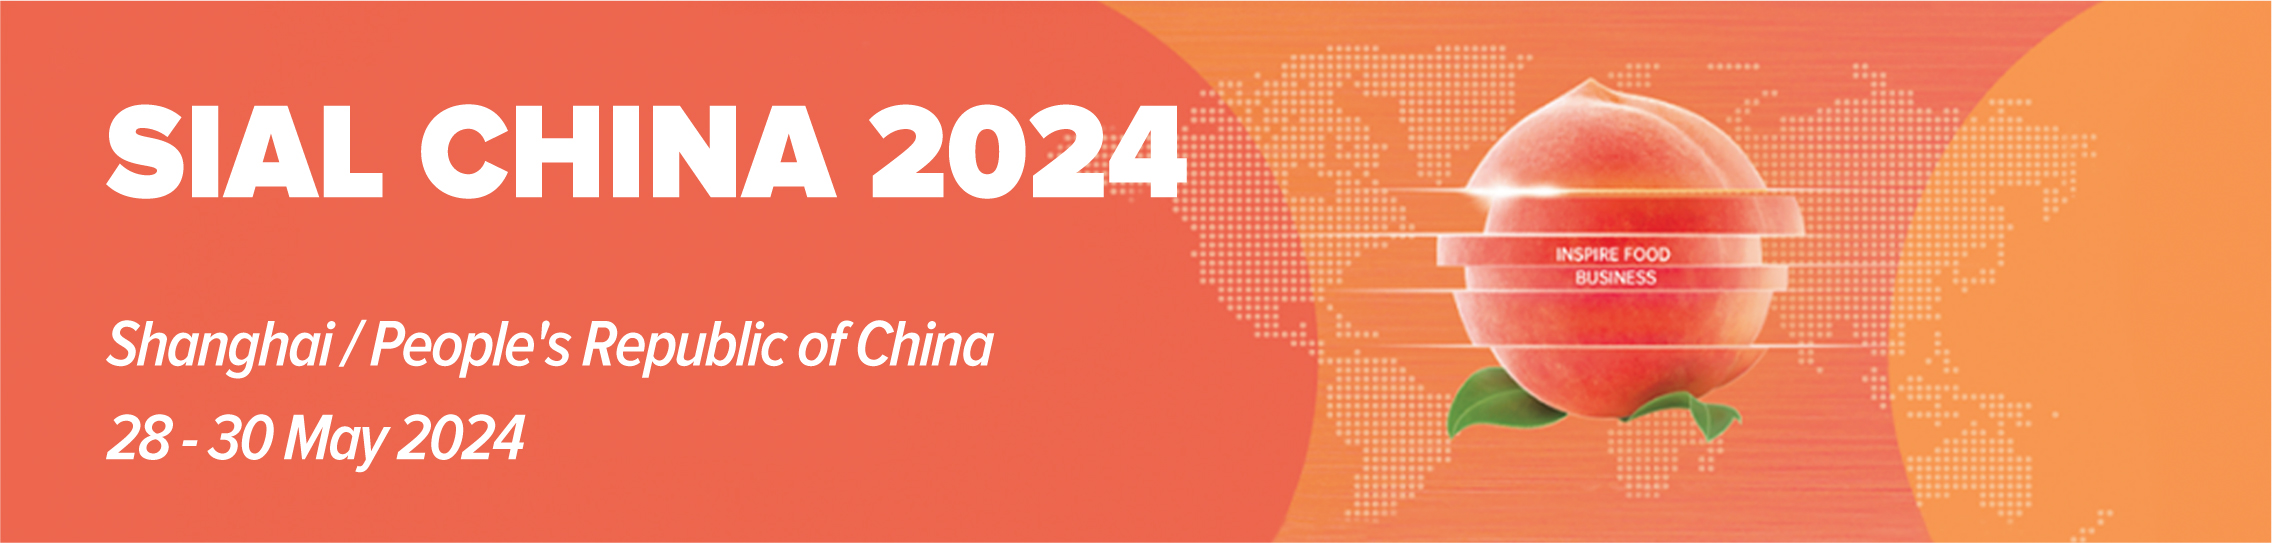 SIAL CHINA 2024